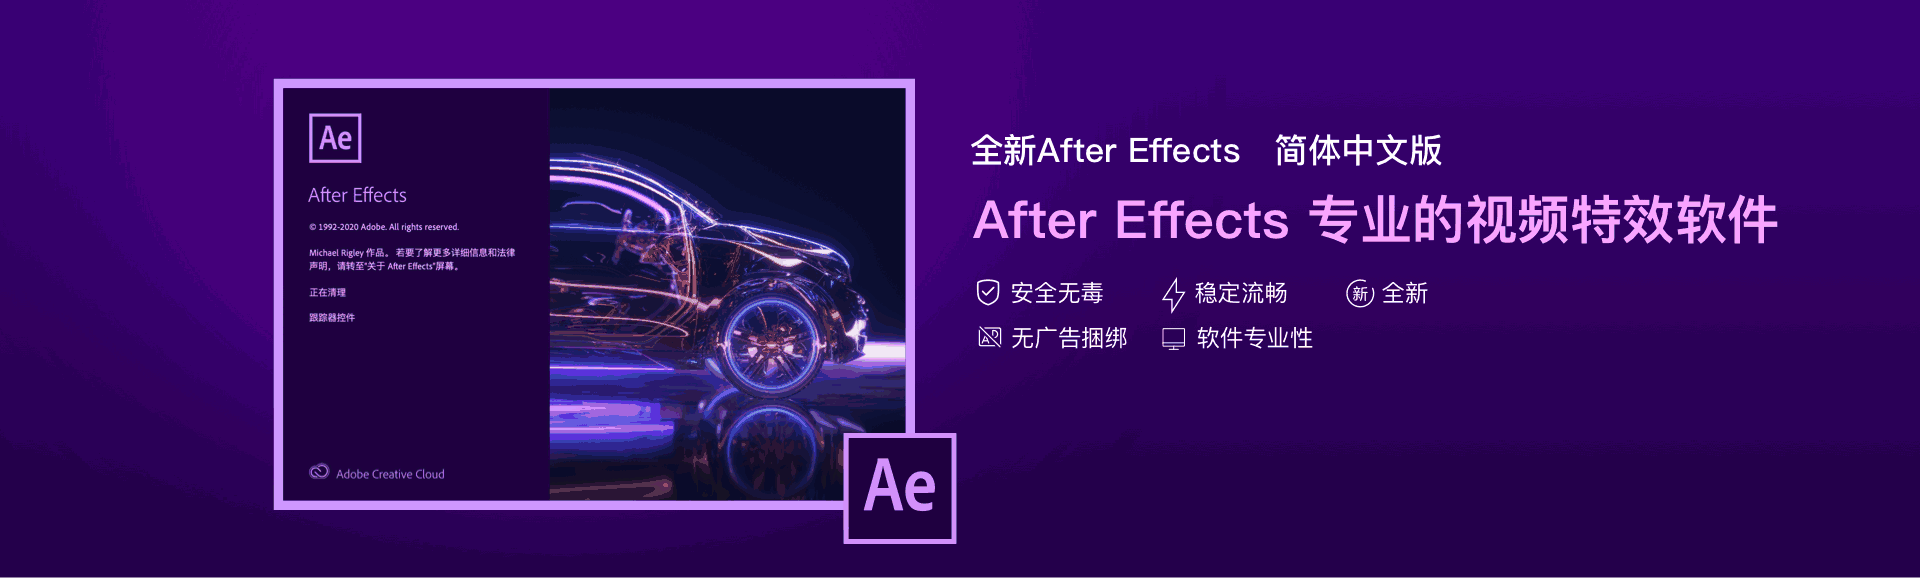 AE软件|Adobe After Effects 2017 Win中文破解版下载 一键安装